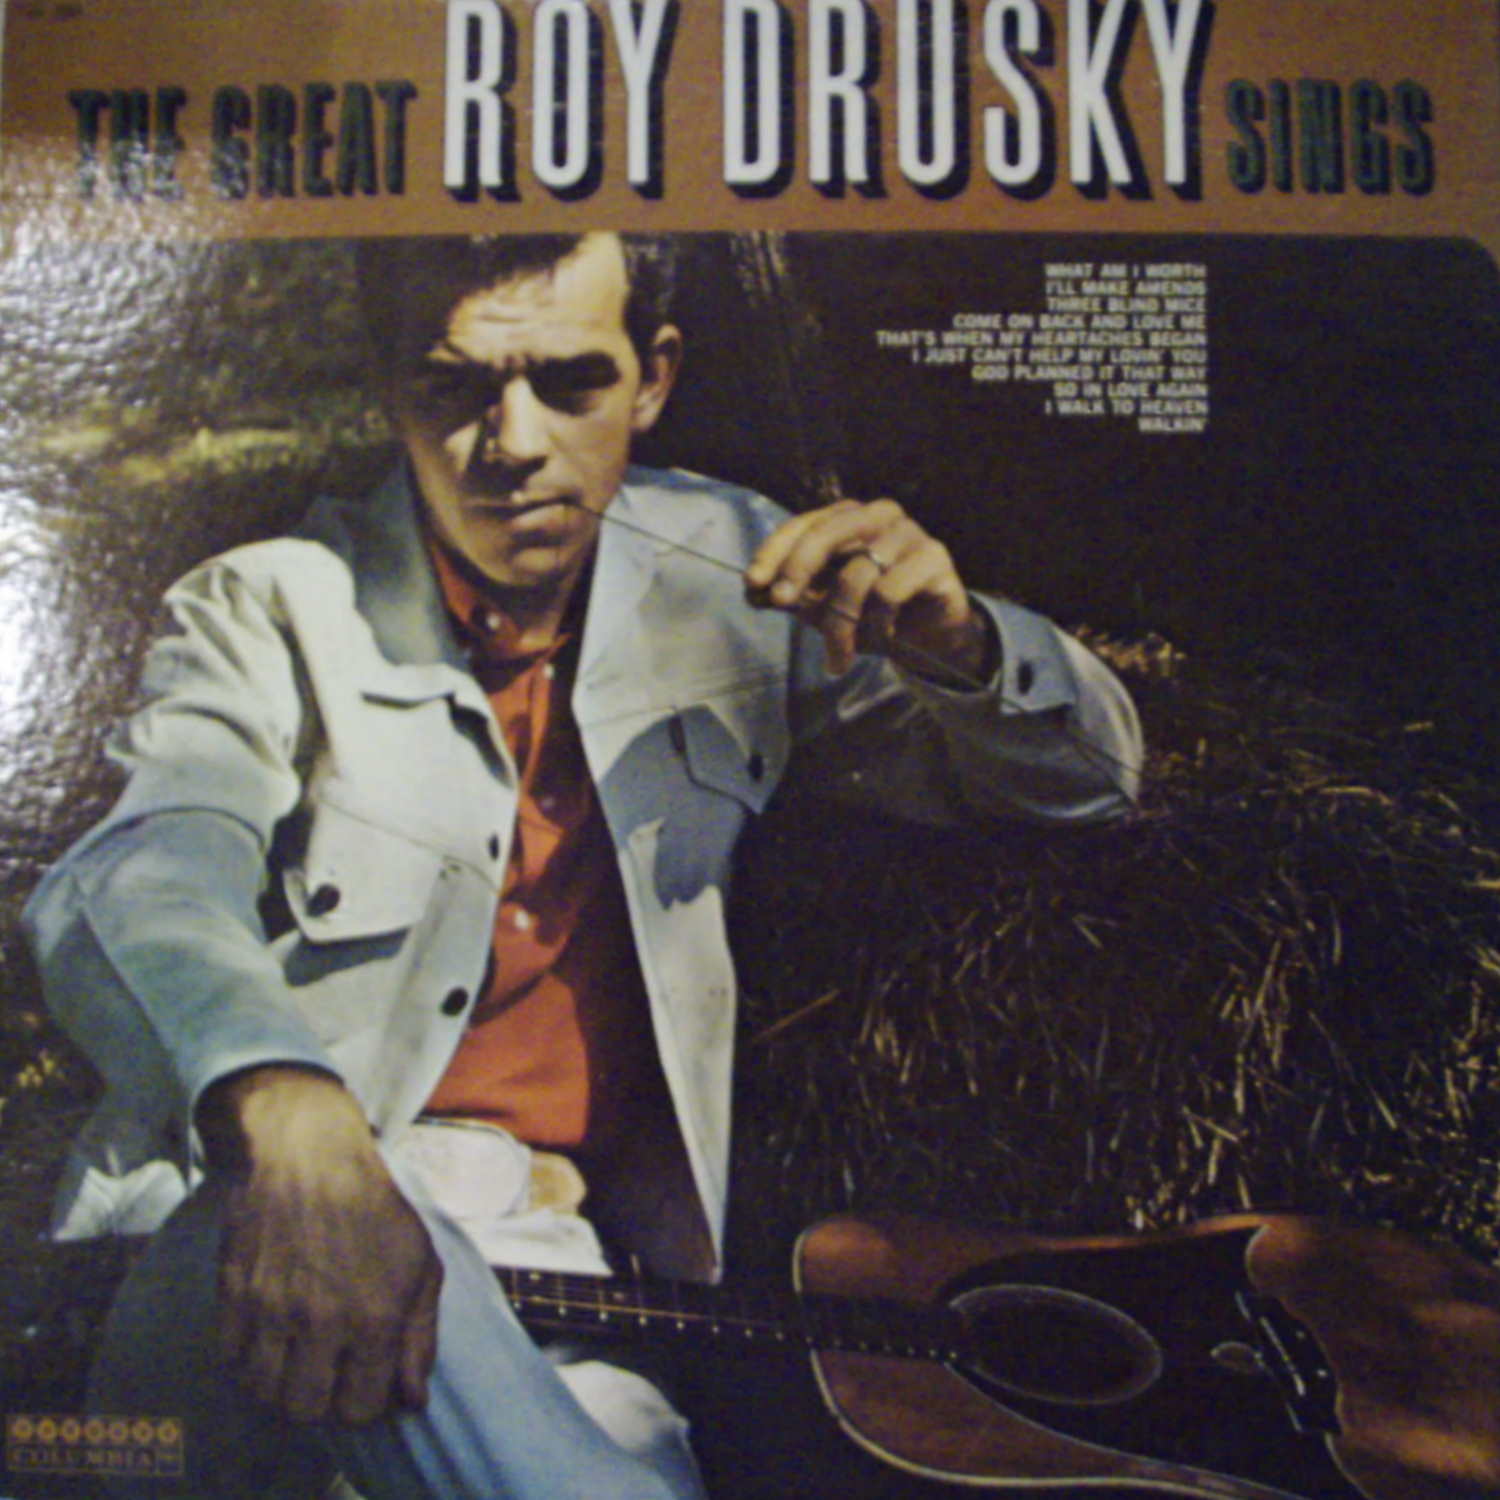 Roy Drusky / The Great Roy Drusky Sings